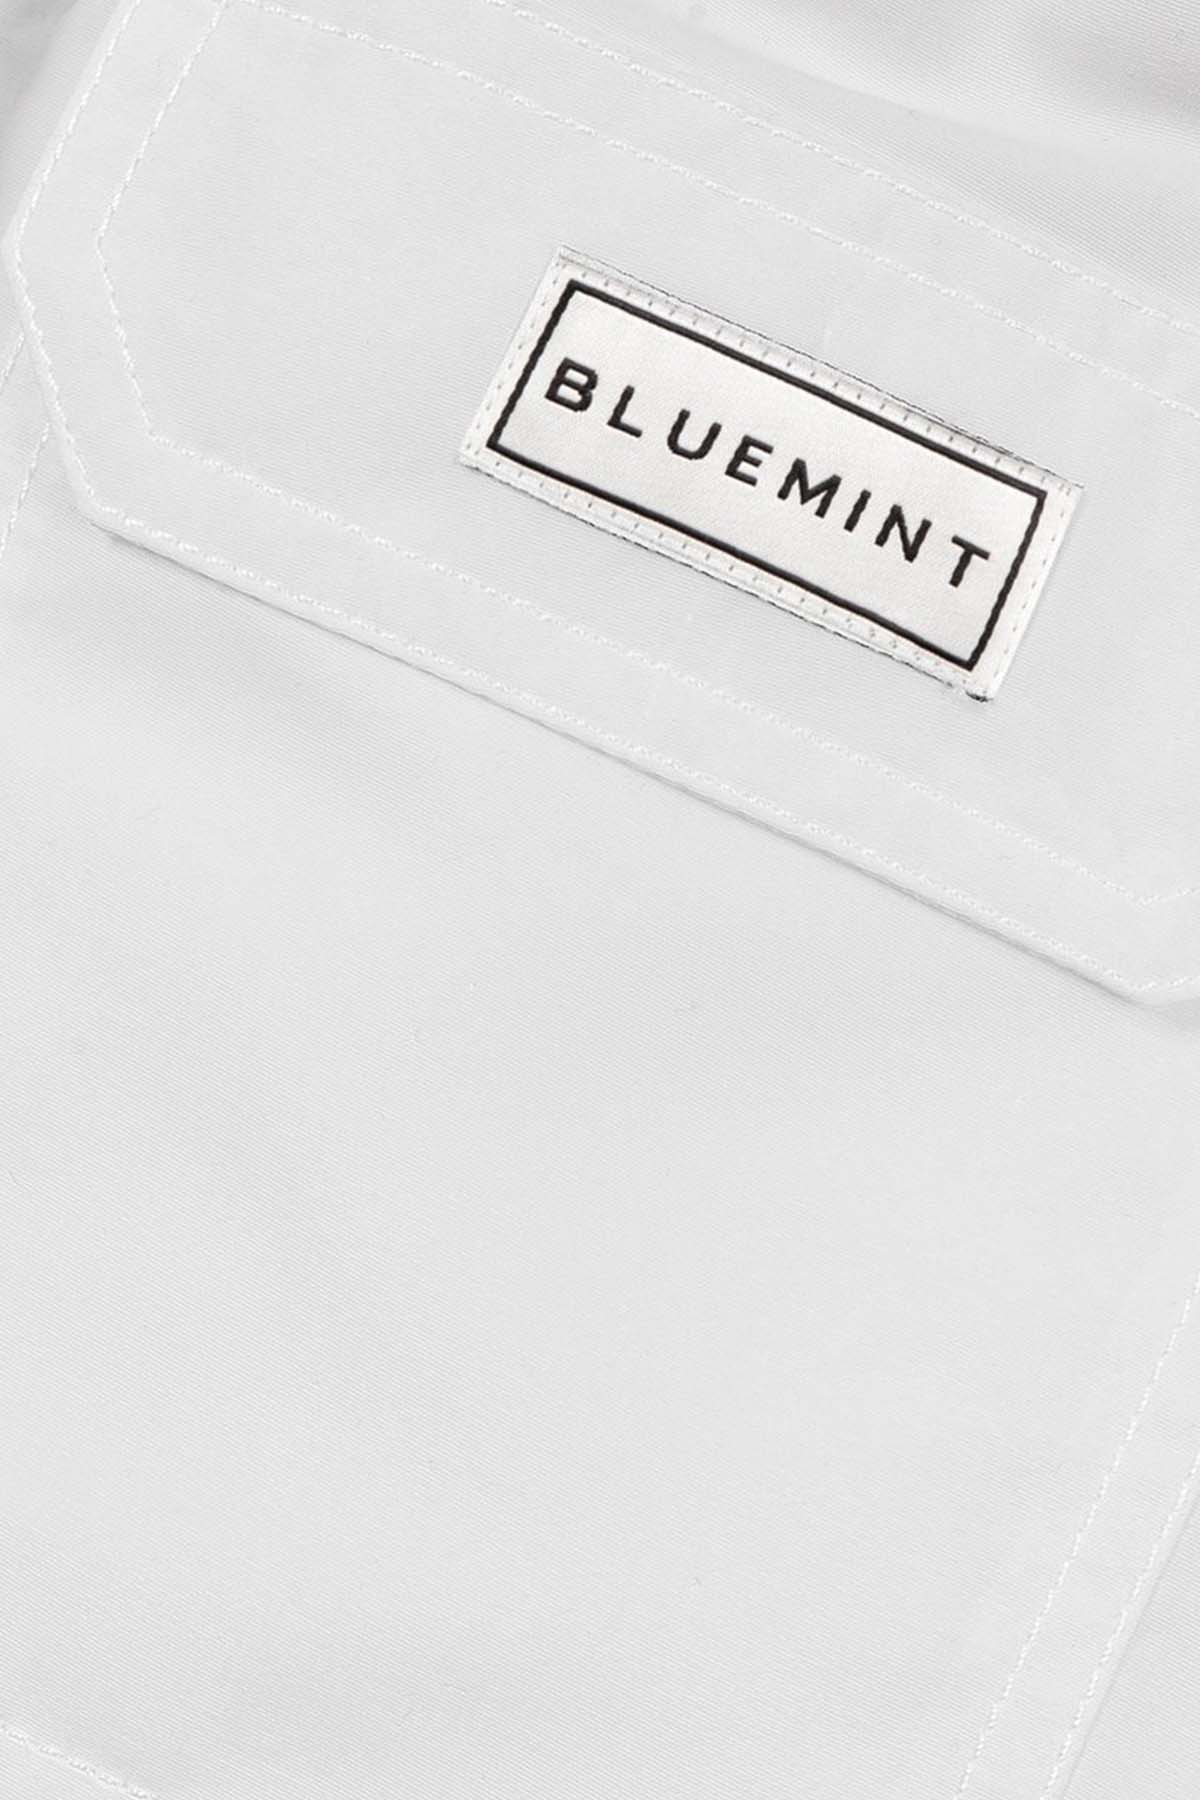 Bluemint Oscar White Şort Mayo-Libas Trendy Fashion Store